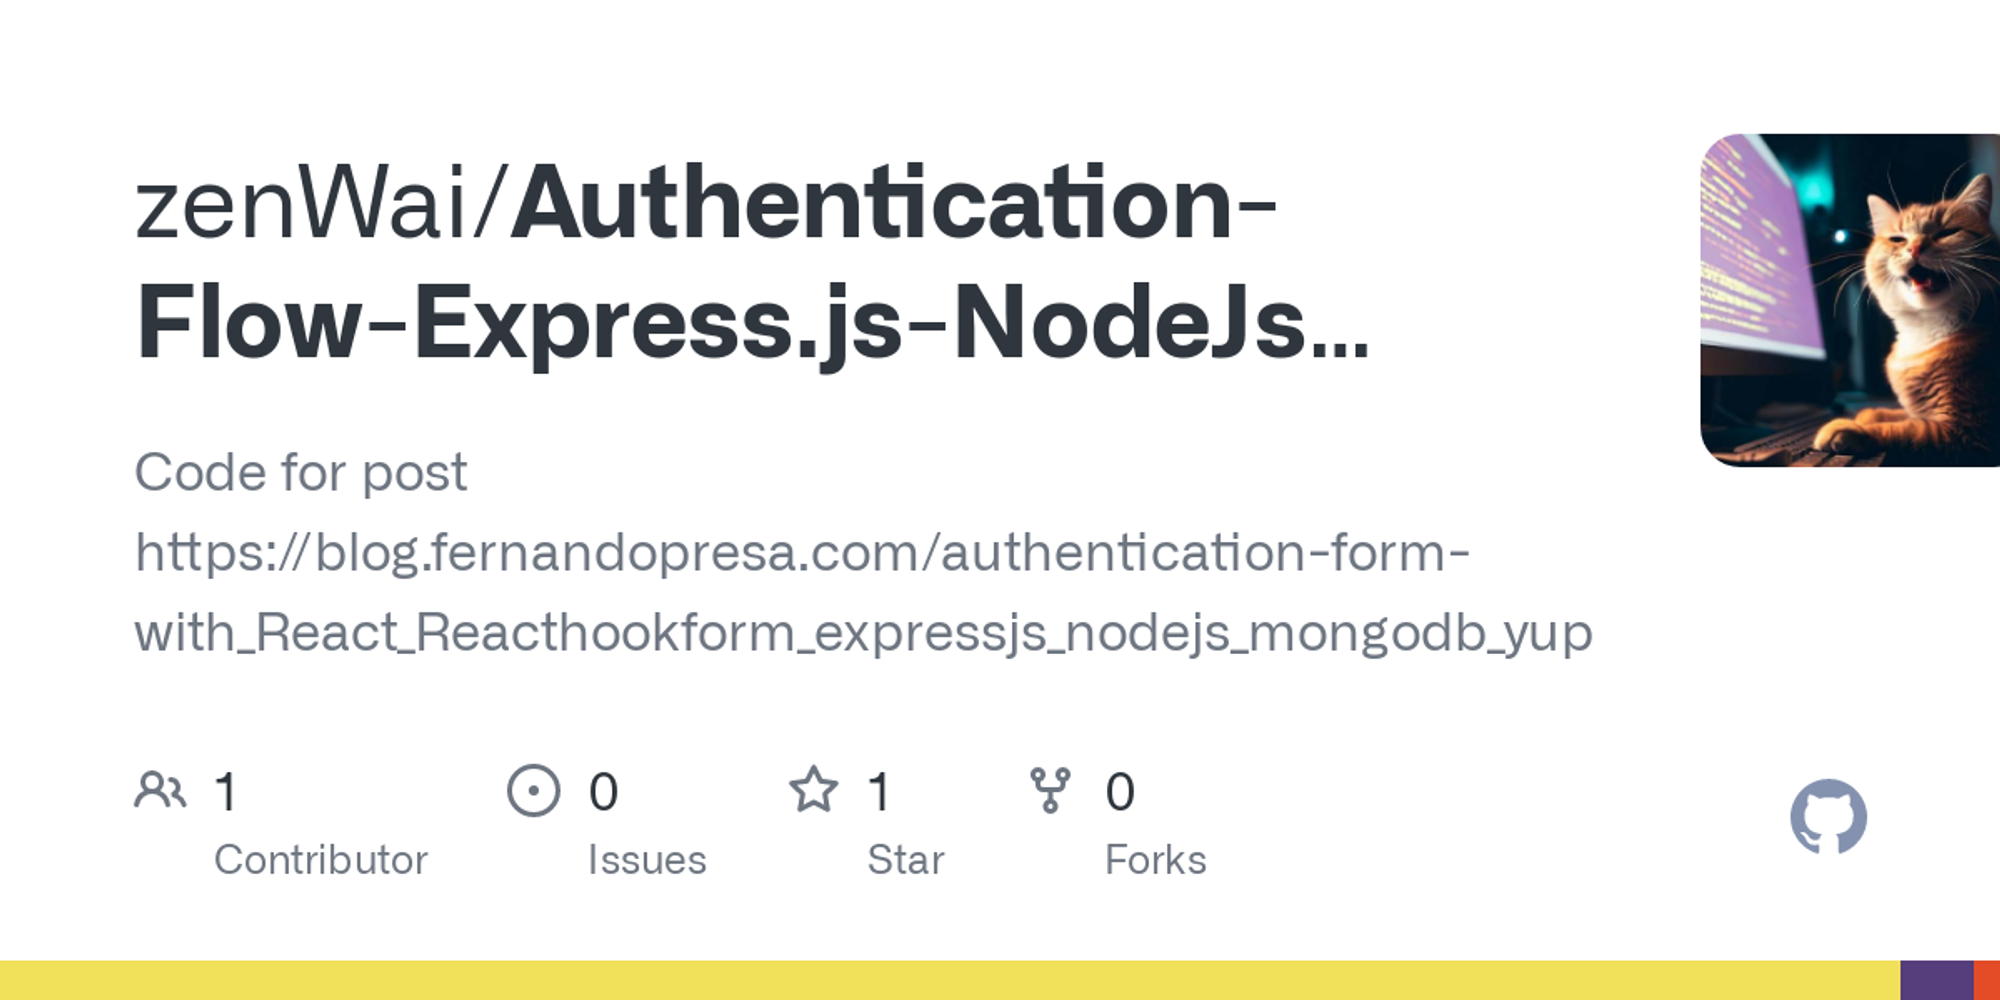 GitHub - zenWai/Authentication-Flow-Express.js-NodeJs-MongoDB: Code for post https://blog.fernandopresa.com/authentication-form-with_React_Reacthookform_expressjs_nodejs_mongodb_yup